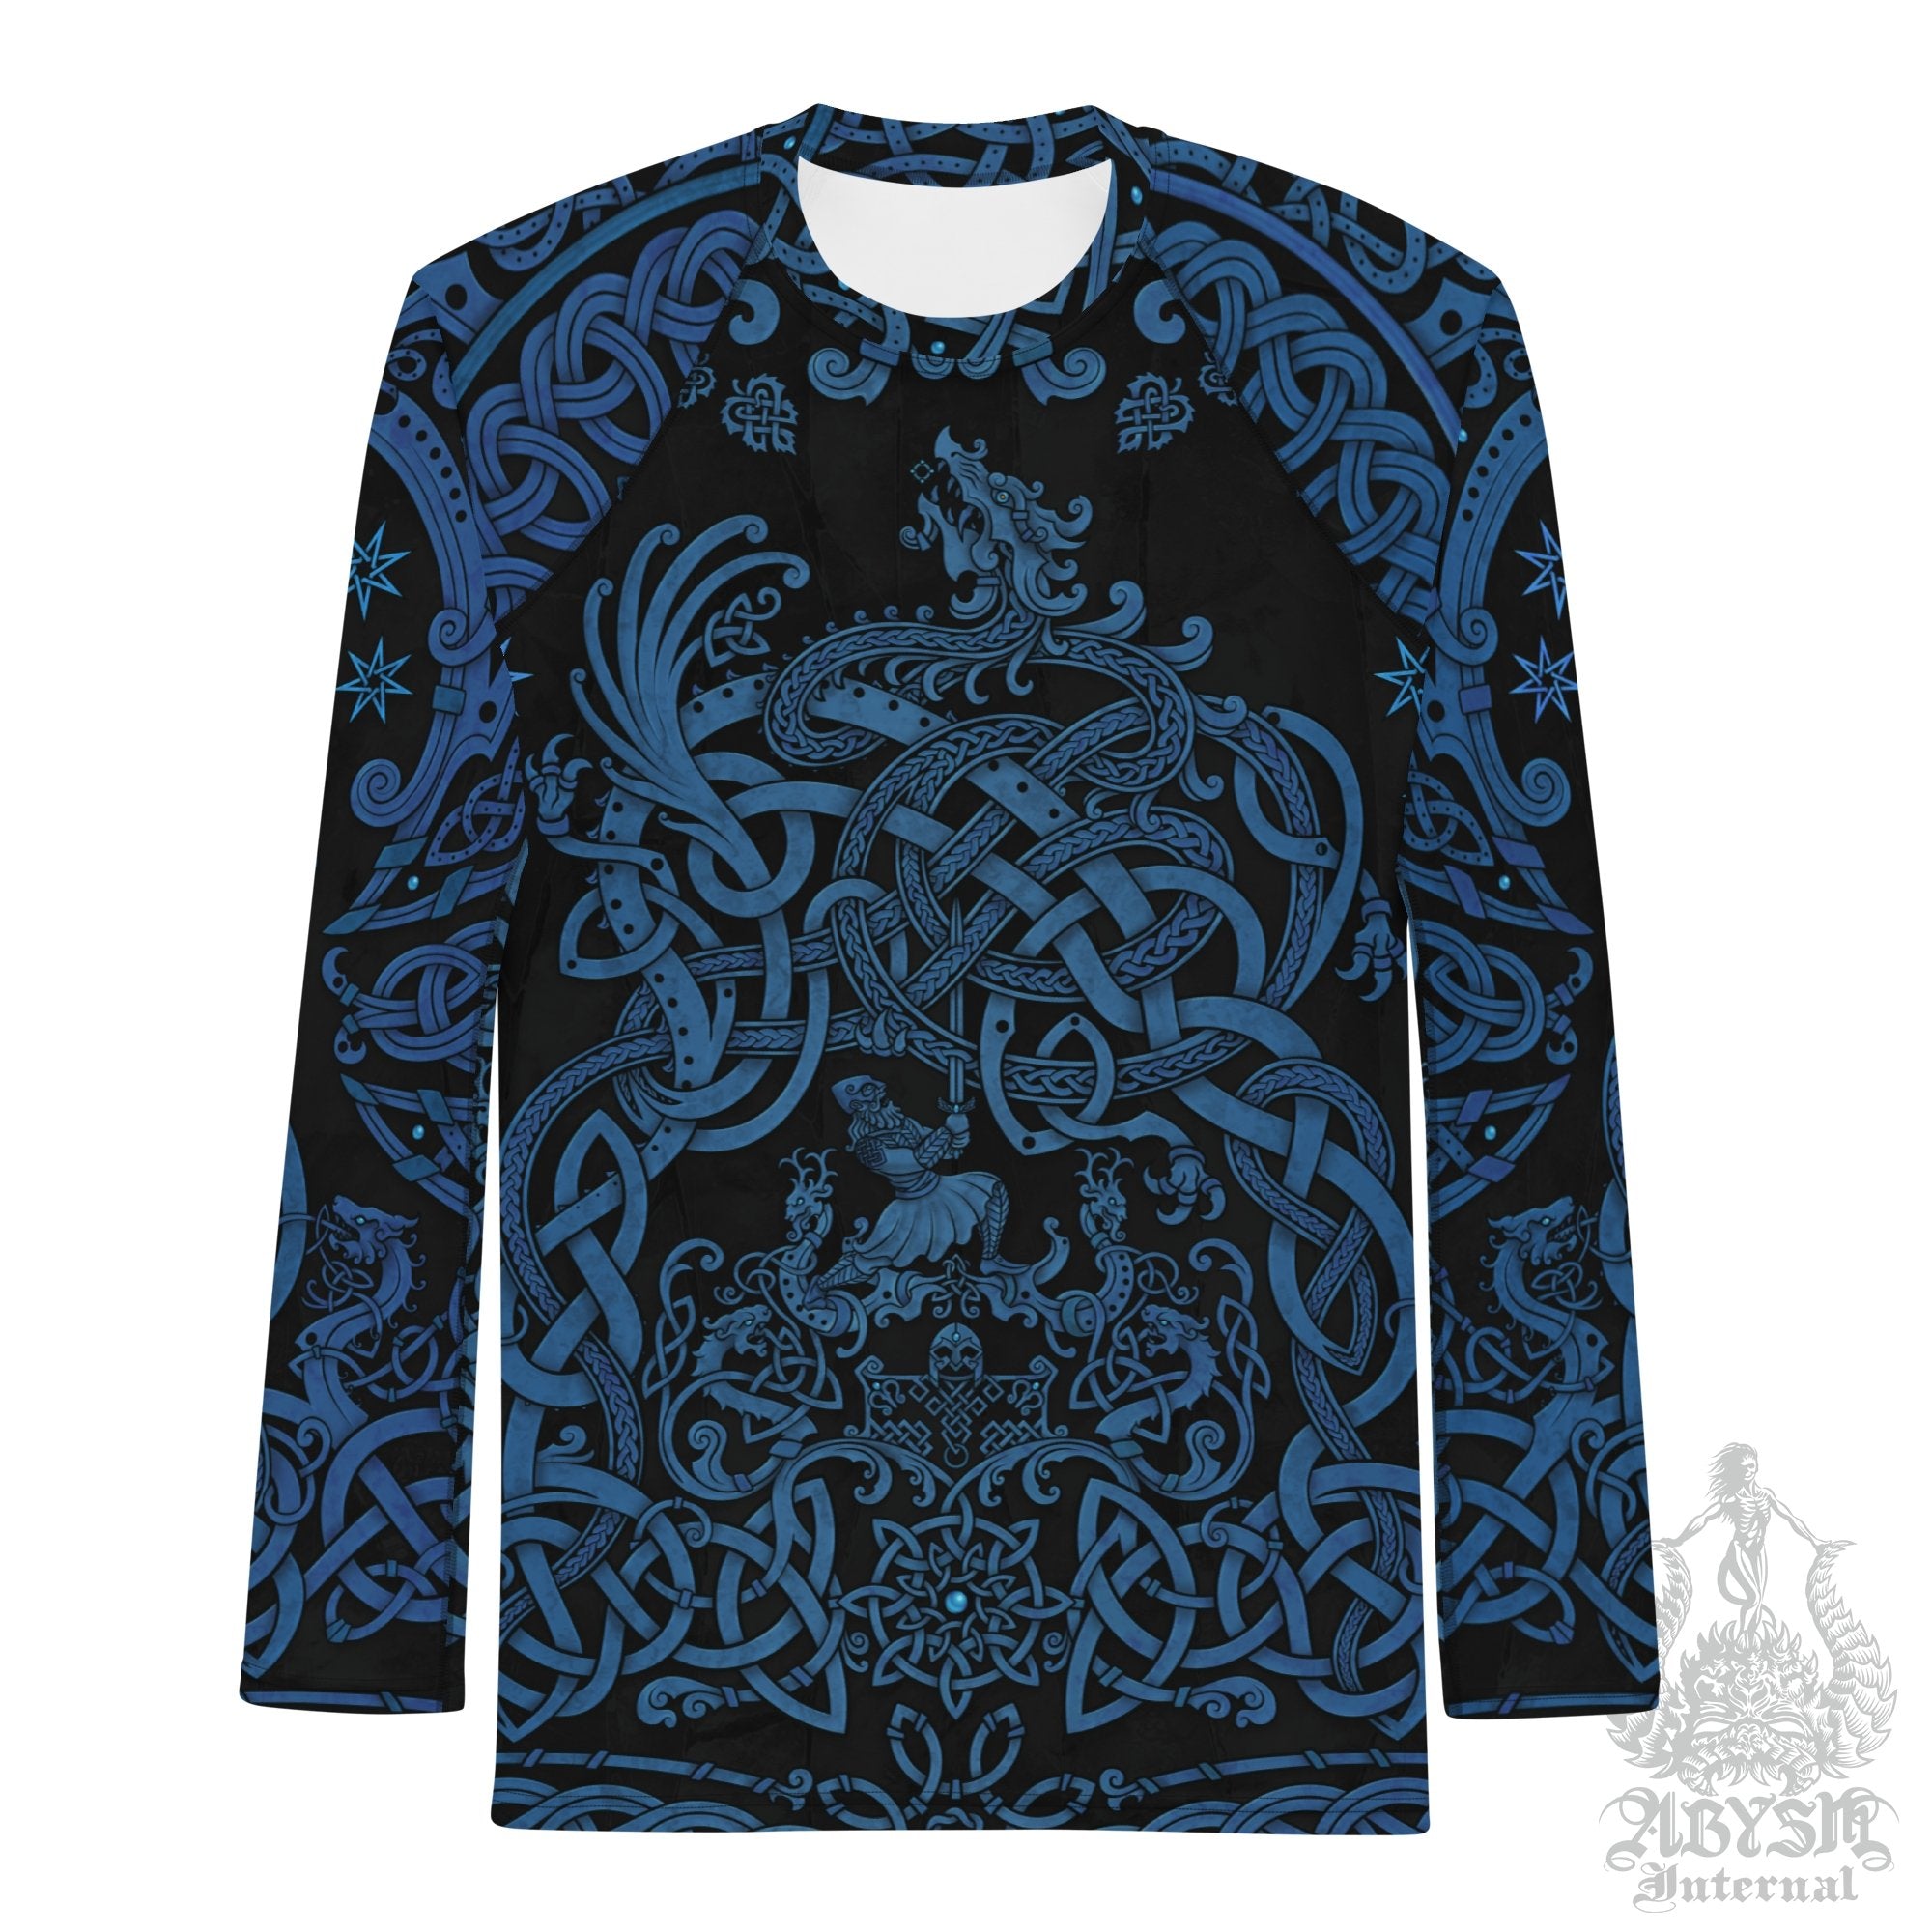 Viking Men's Rash Guard, Long Sleeve spandex shirt for surfing, swimwear top for water sports - Dragon Fafnir and Sigurd, Black and Blue - Abysm Internal